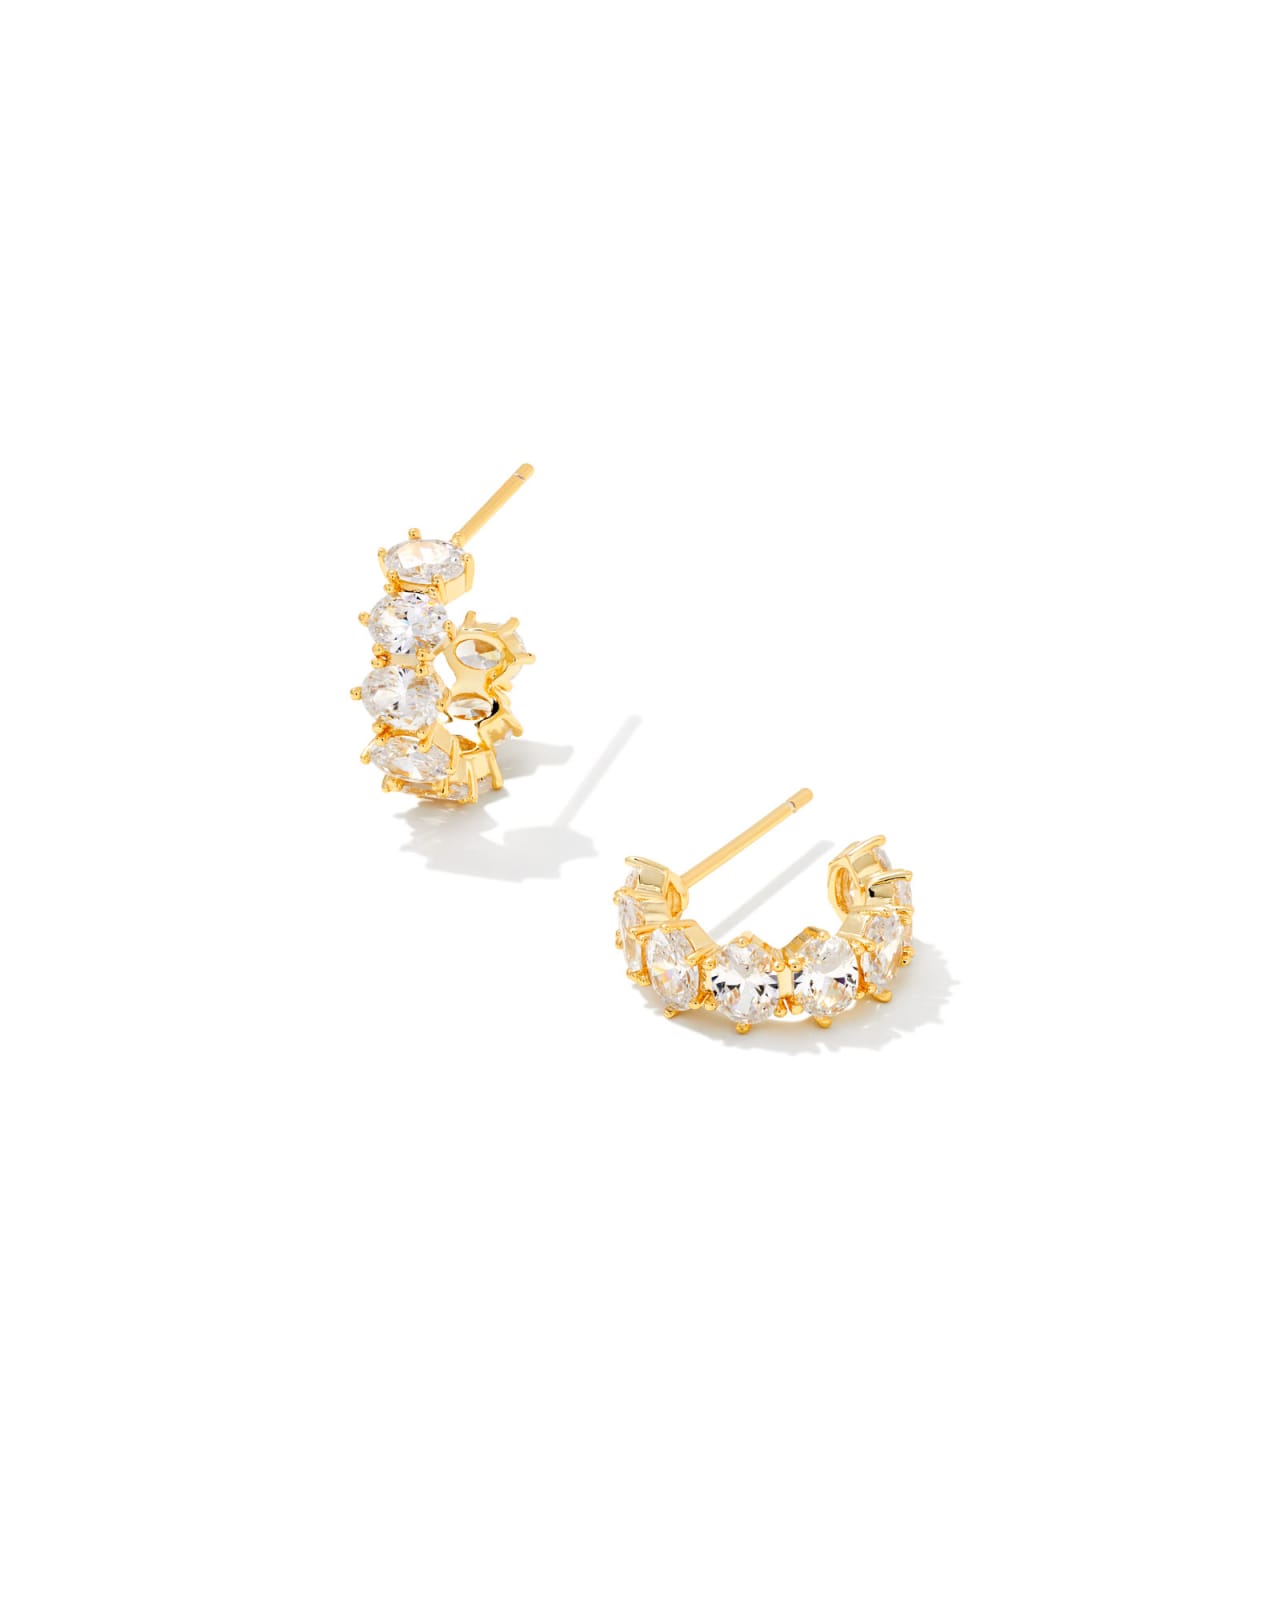 Cailin Gold Crystal Huggie Earrings in Aqua Crystal | Kendra Scott | Kendra Scott